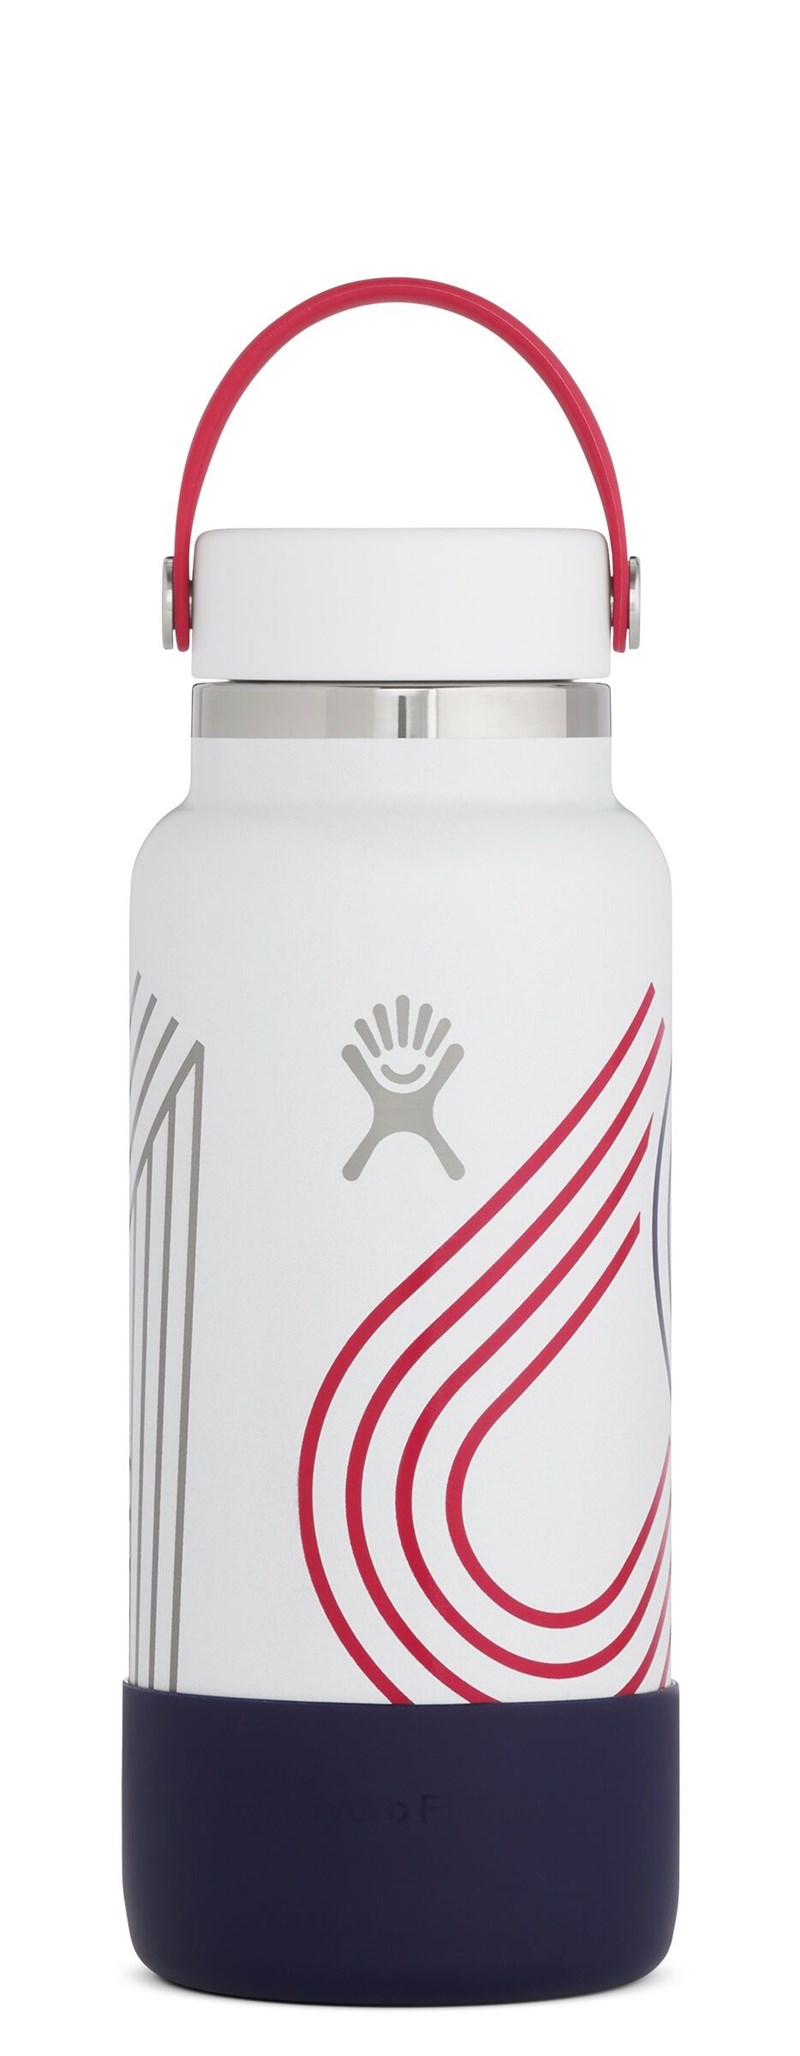 Hydro Flask 32 oz Special Edition WATER BOTTLE w FLEX Boot STRAW